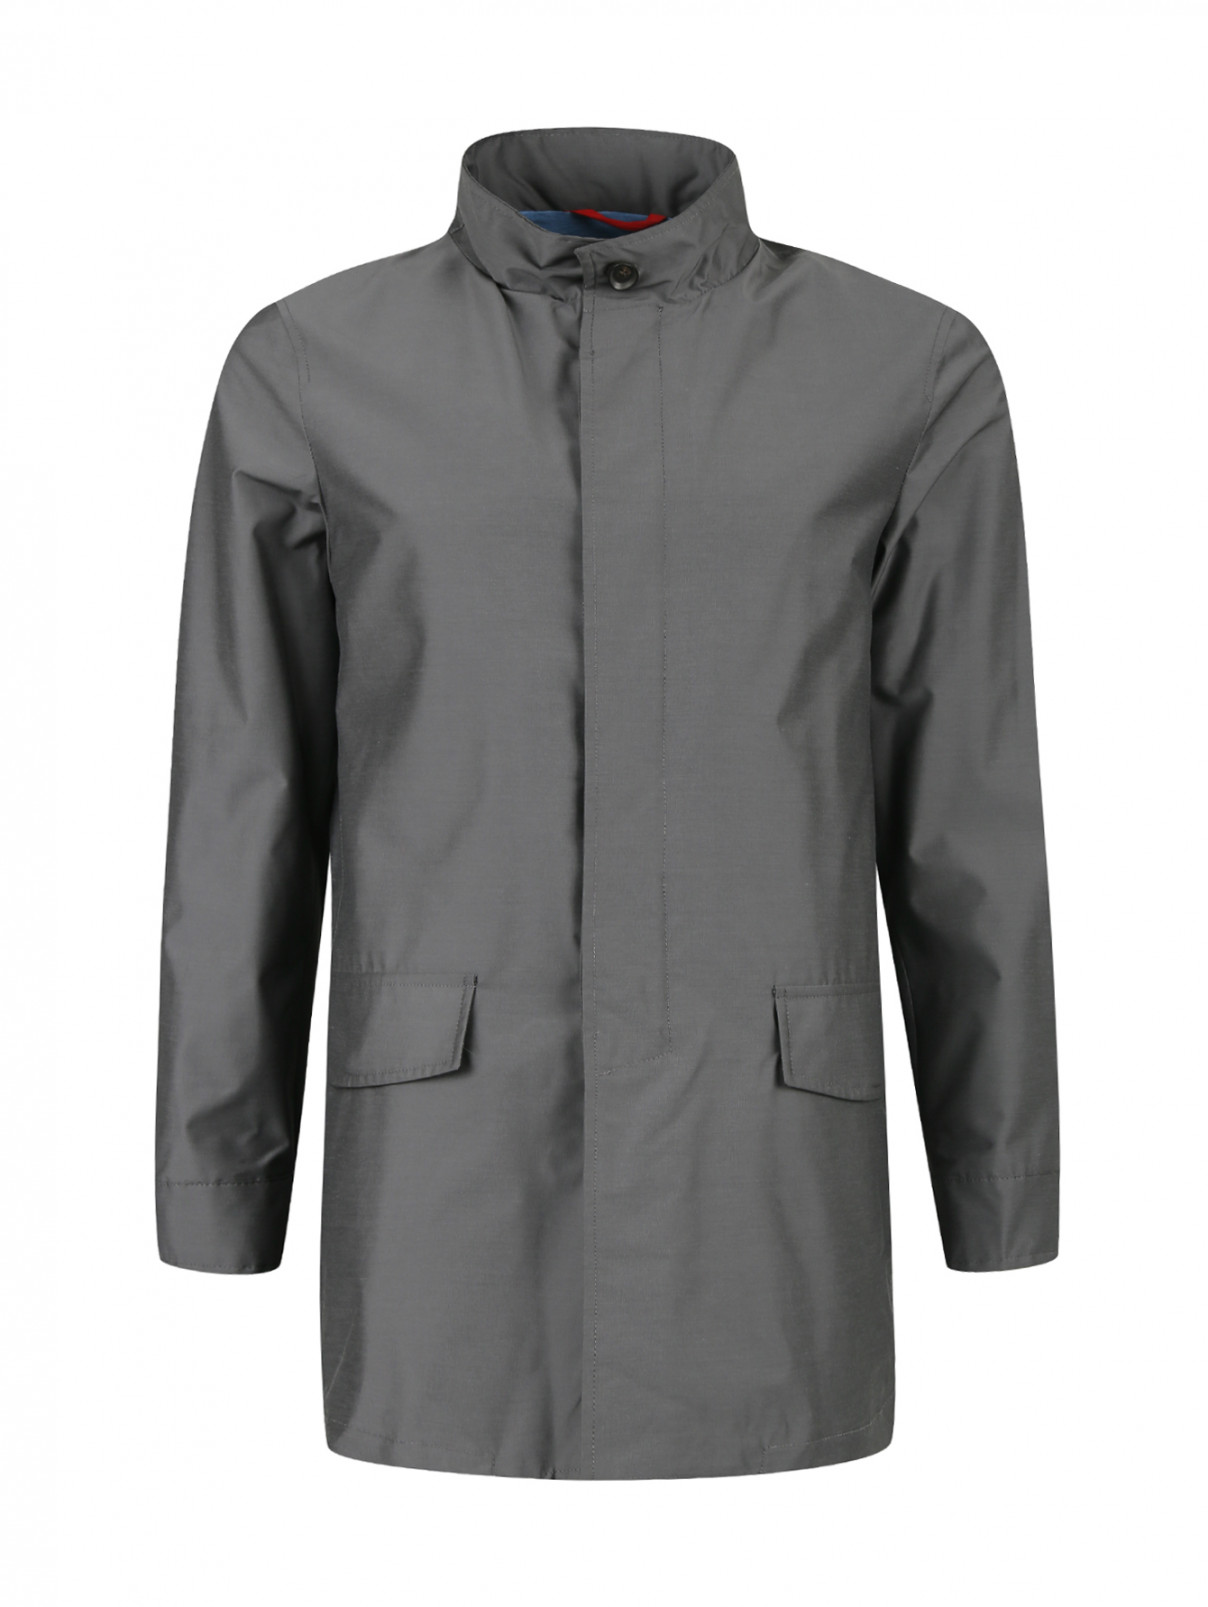 Куртка на молнии Isaia  –  Общий вид  – Цвет:  Серый